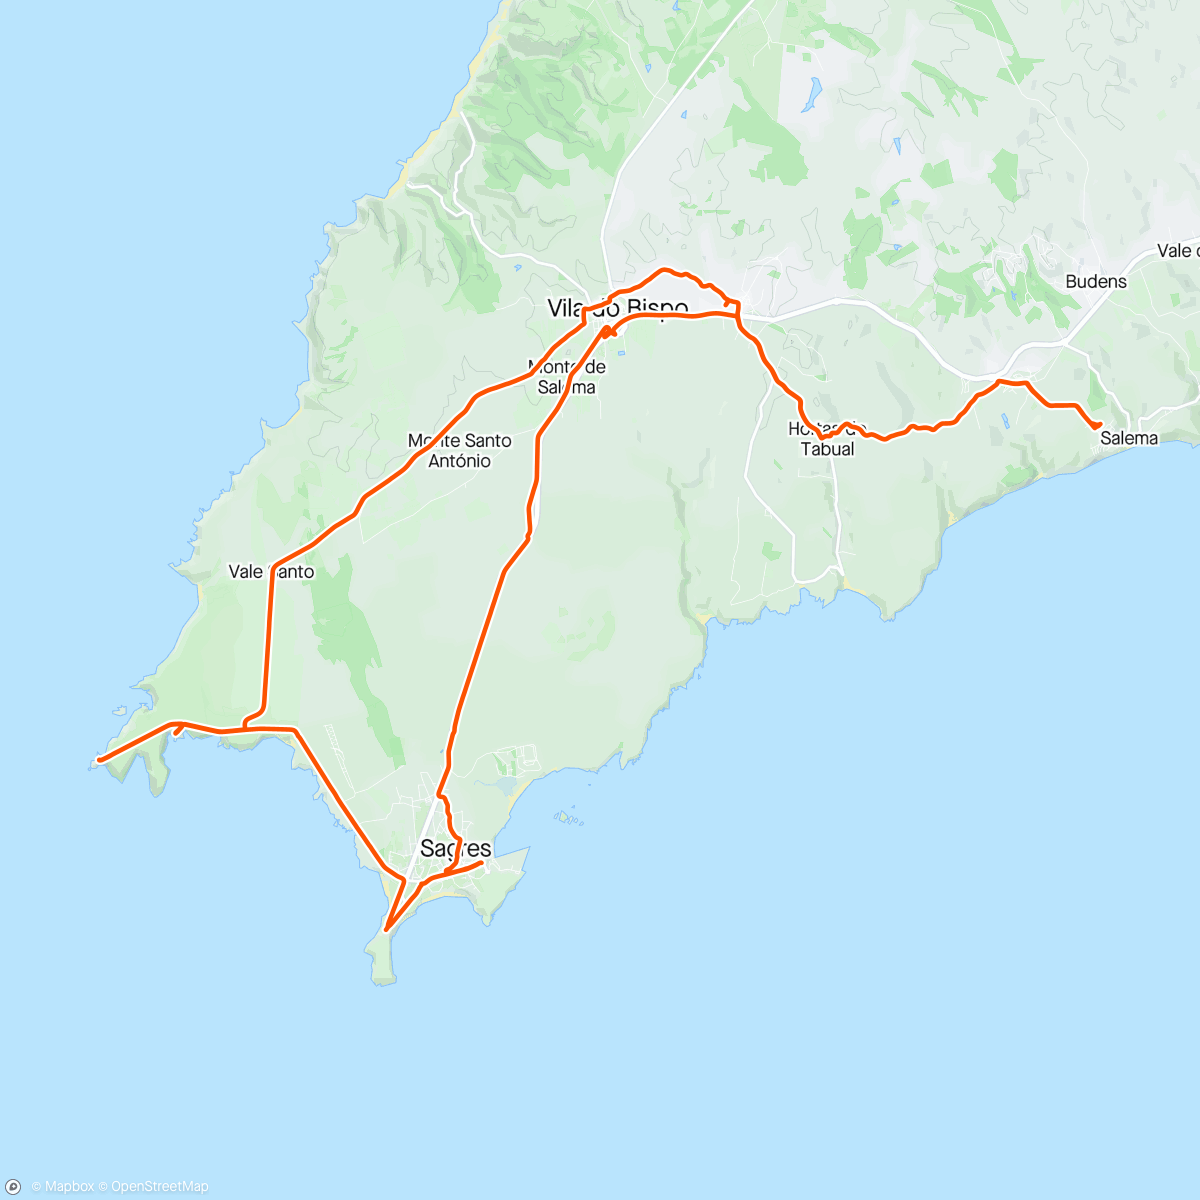 「Salema, Sao Vicente and Sagres loop」活動的地圖